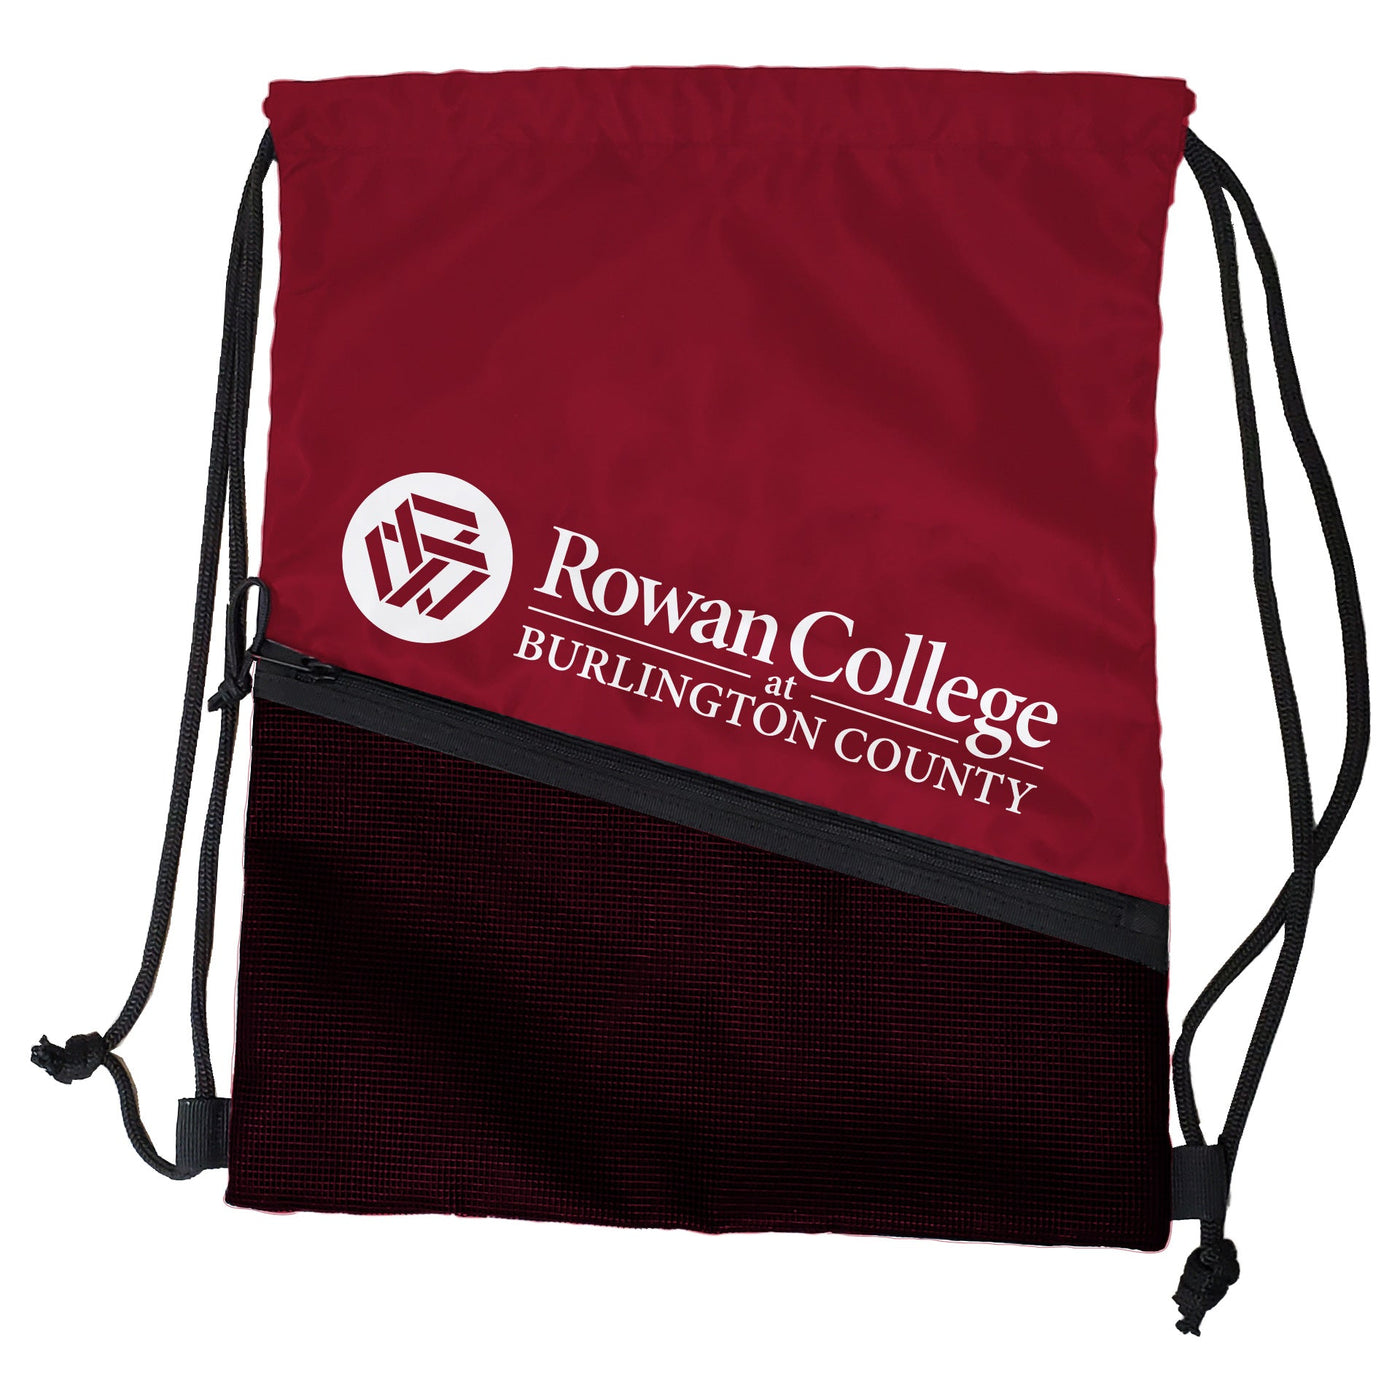 Rowan College at Burlington County Tilt Backsack - Logo Brands